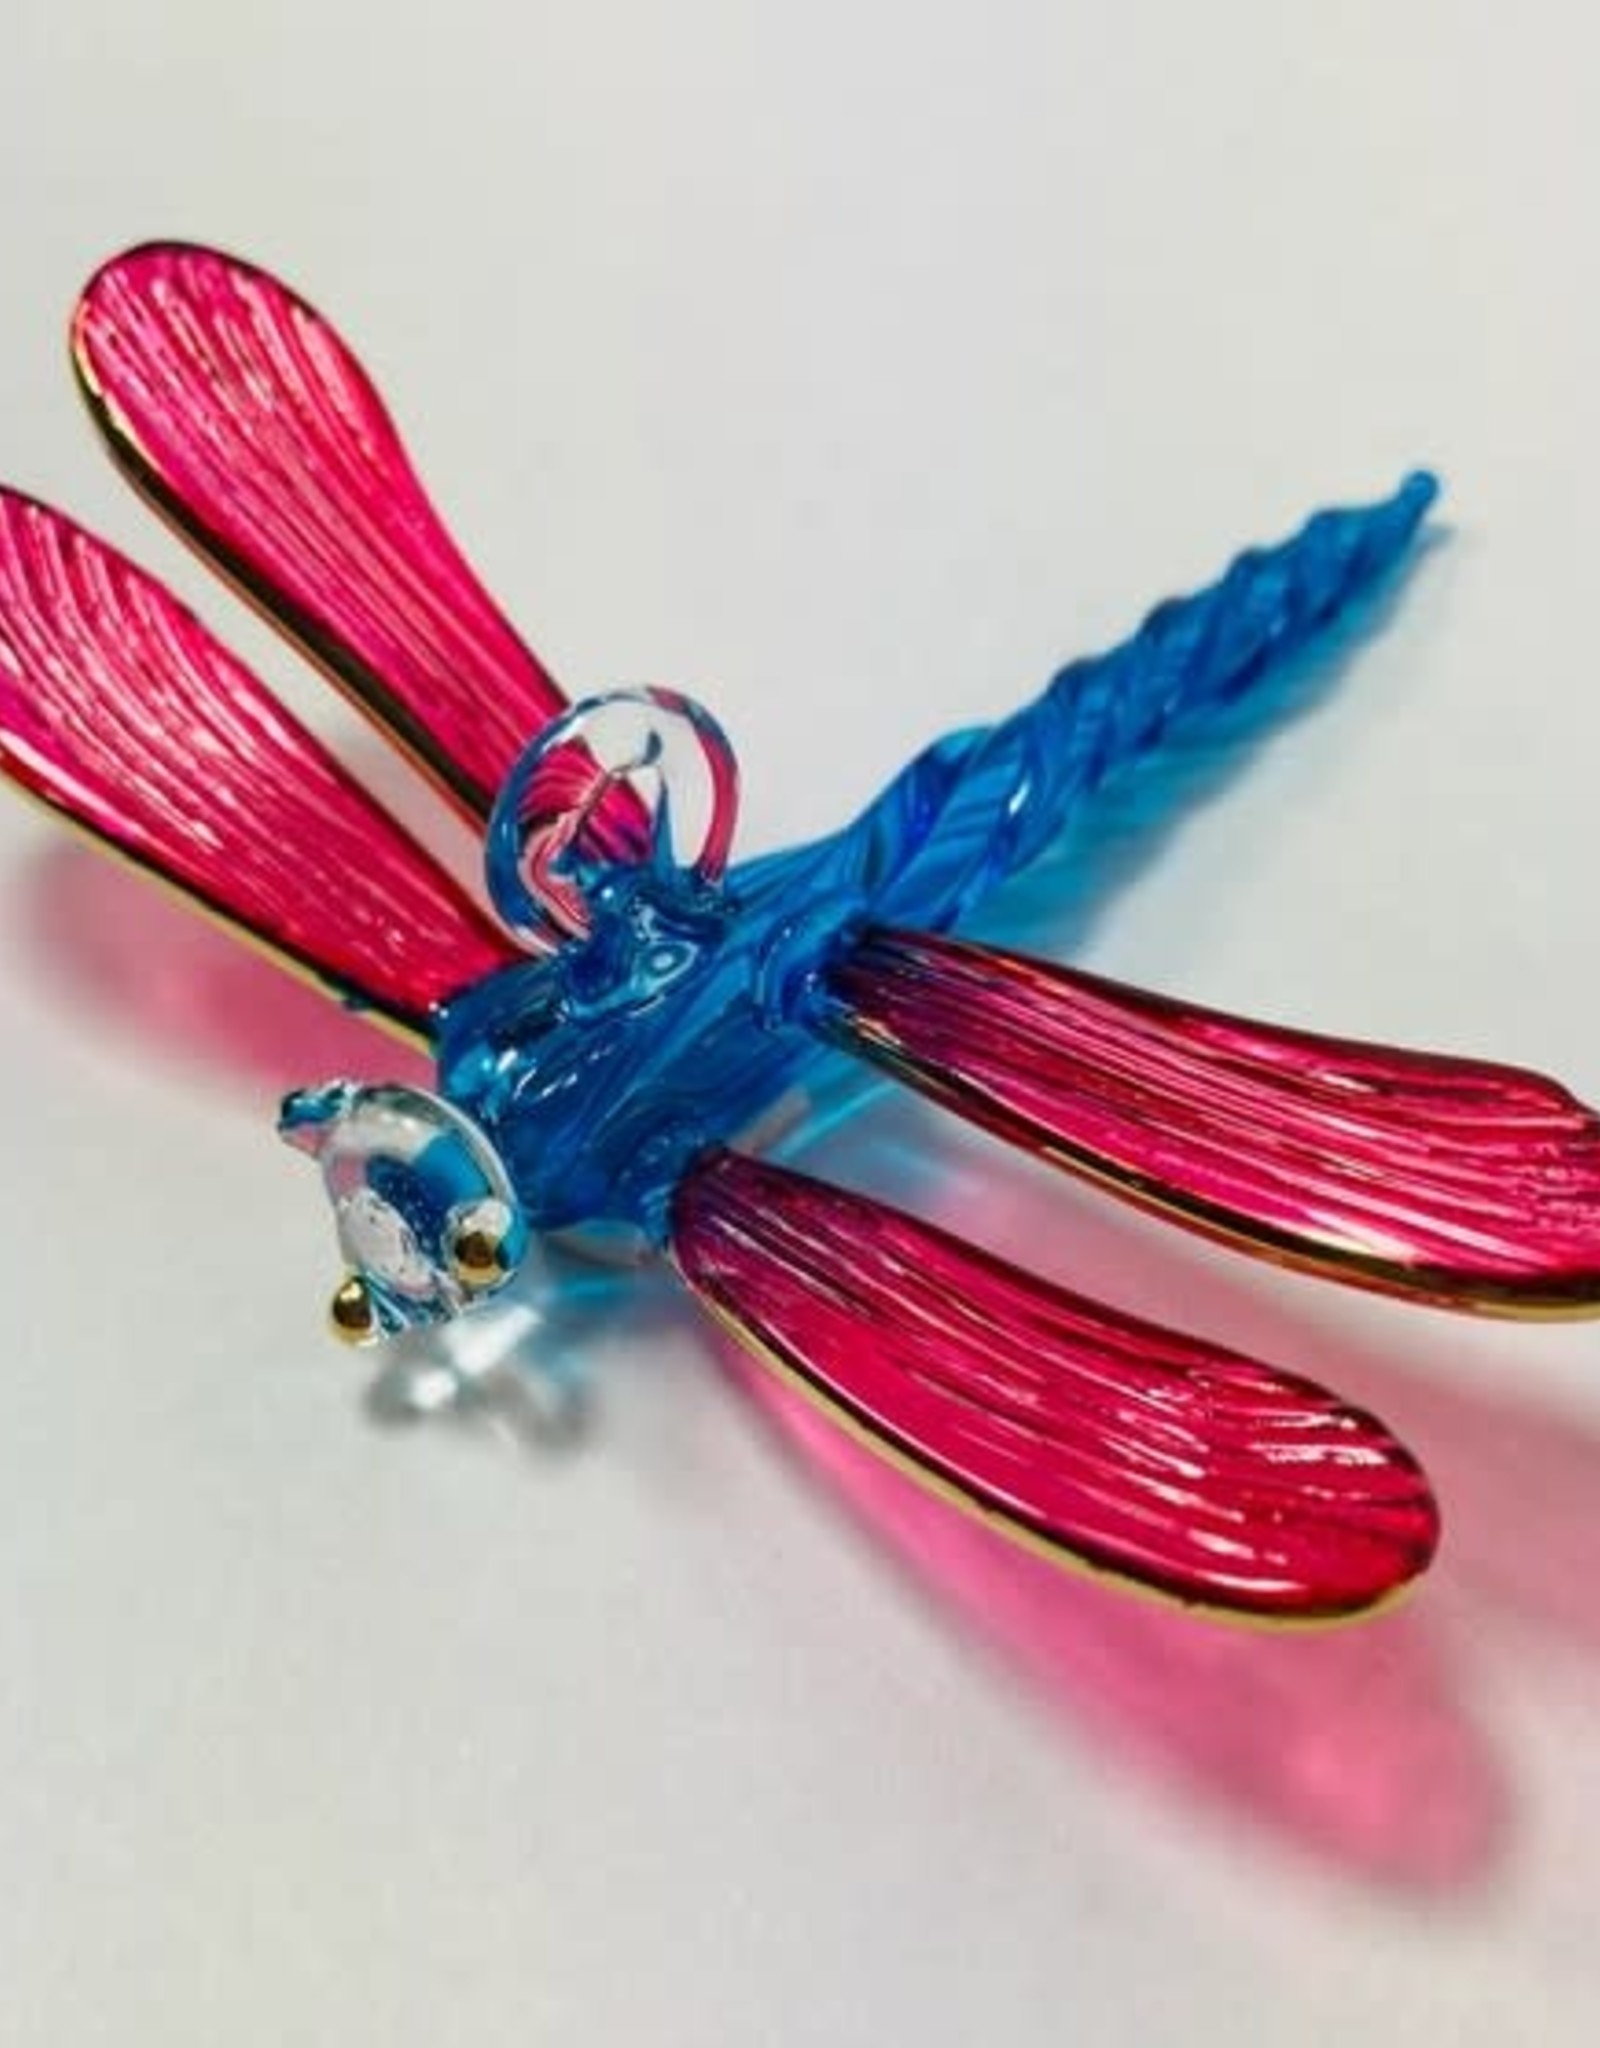 Dandarah Blown Glass Ornament - Dragonfly Fuchsia & Turquoise